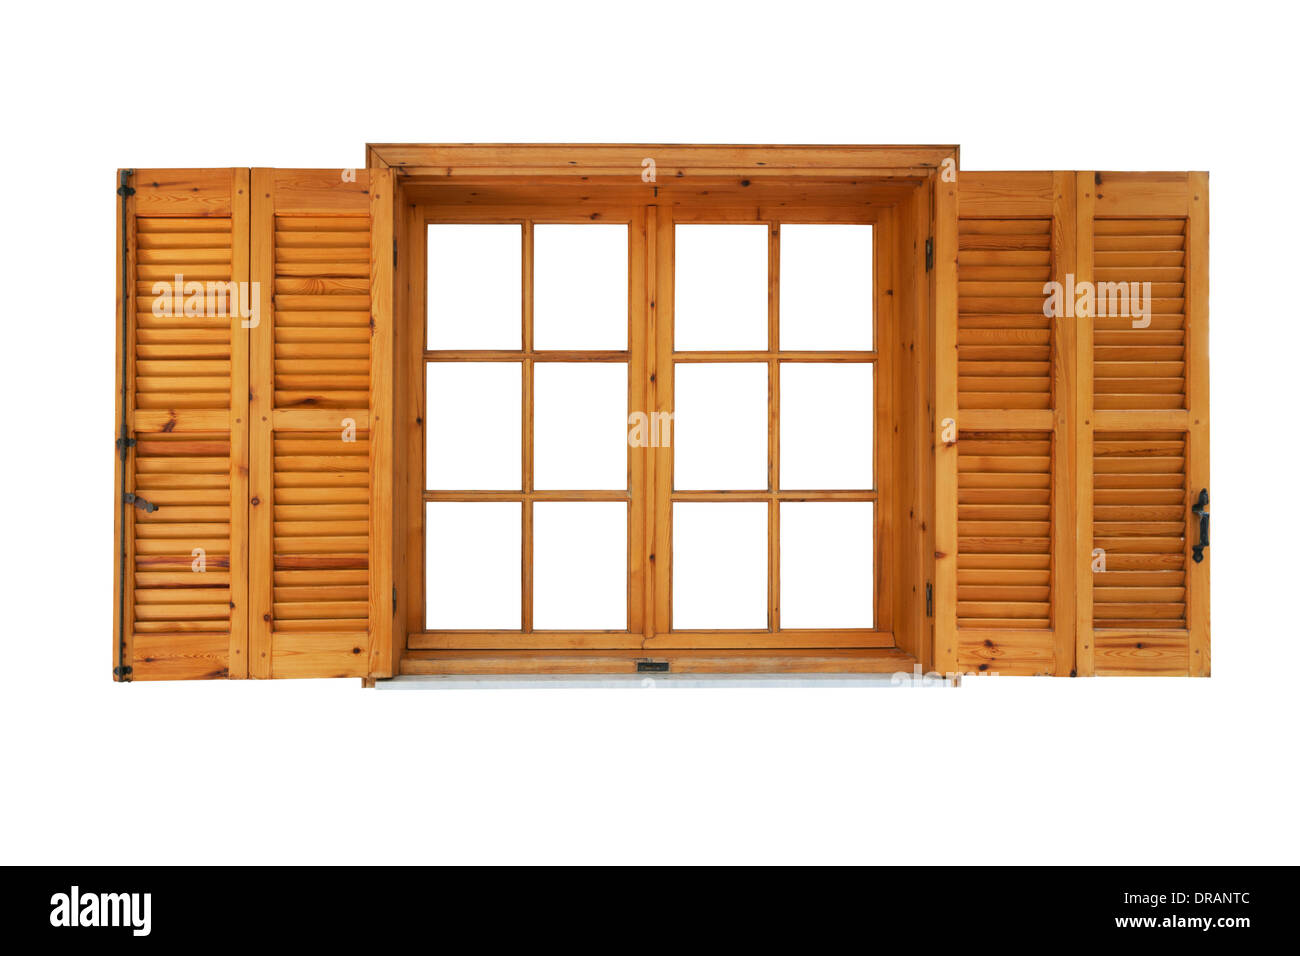 Con persianas de madera de ventana lateral exterior abierto aislado sobre fondo blanco. Foto de stock